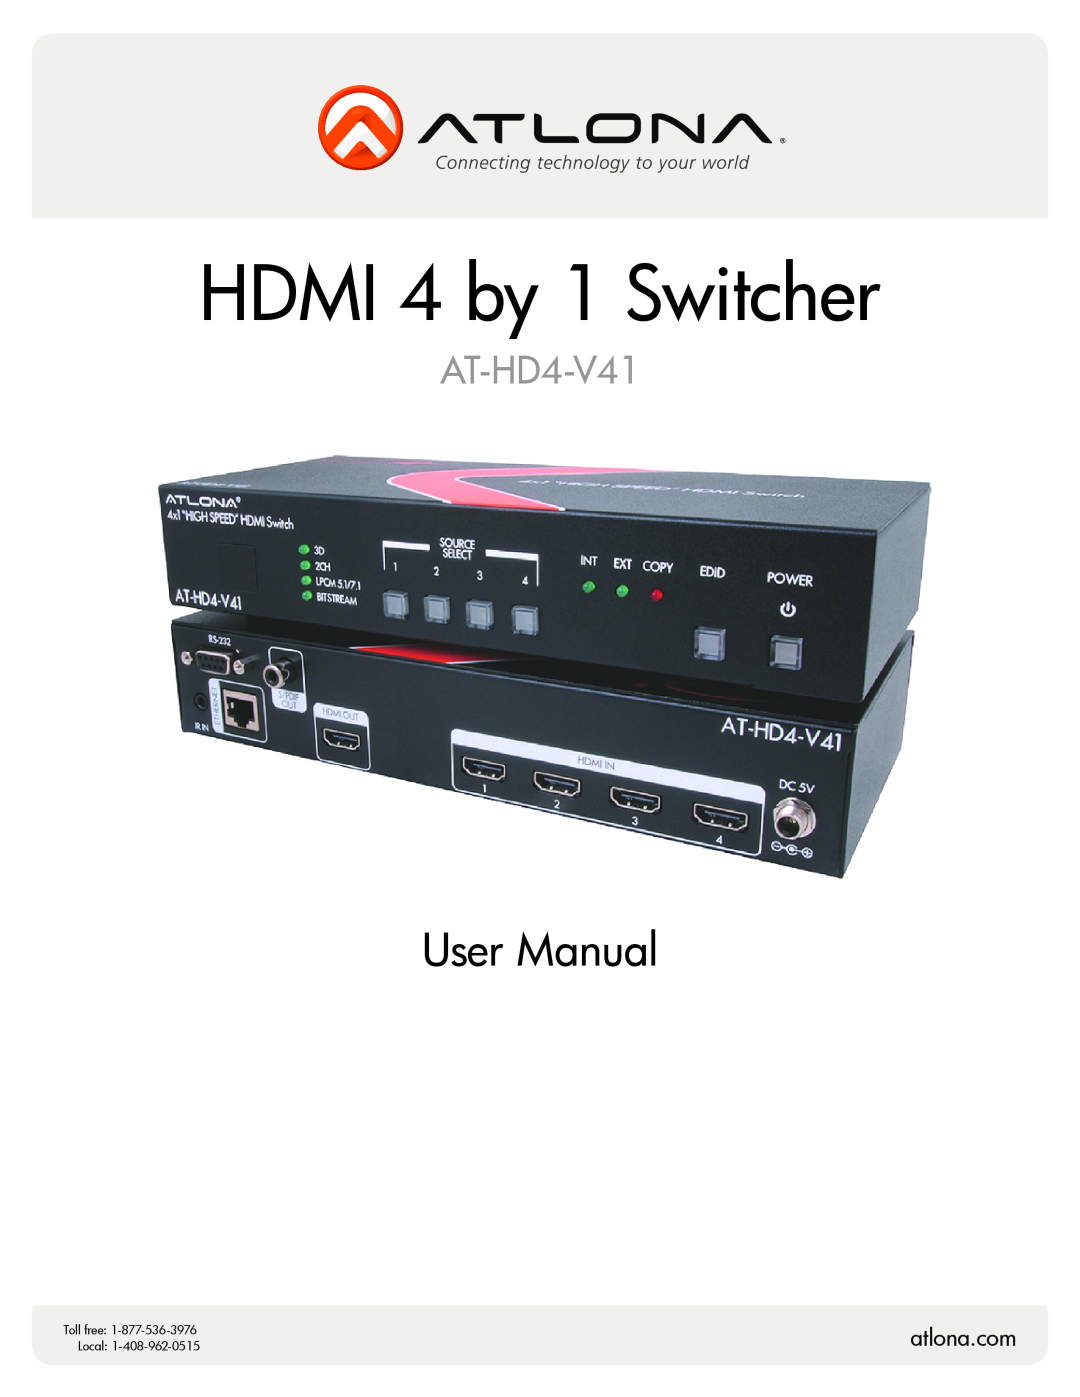 Atlona AT-HD4-V41 user manual HDMI 4 by 1 Switcher, User Manual, atlona.com, Toll free, Local 